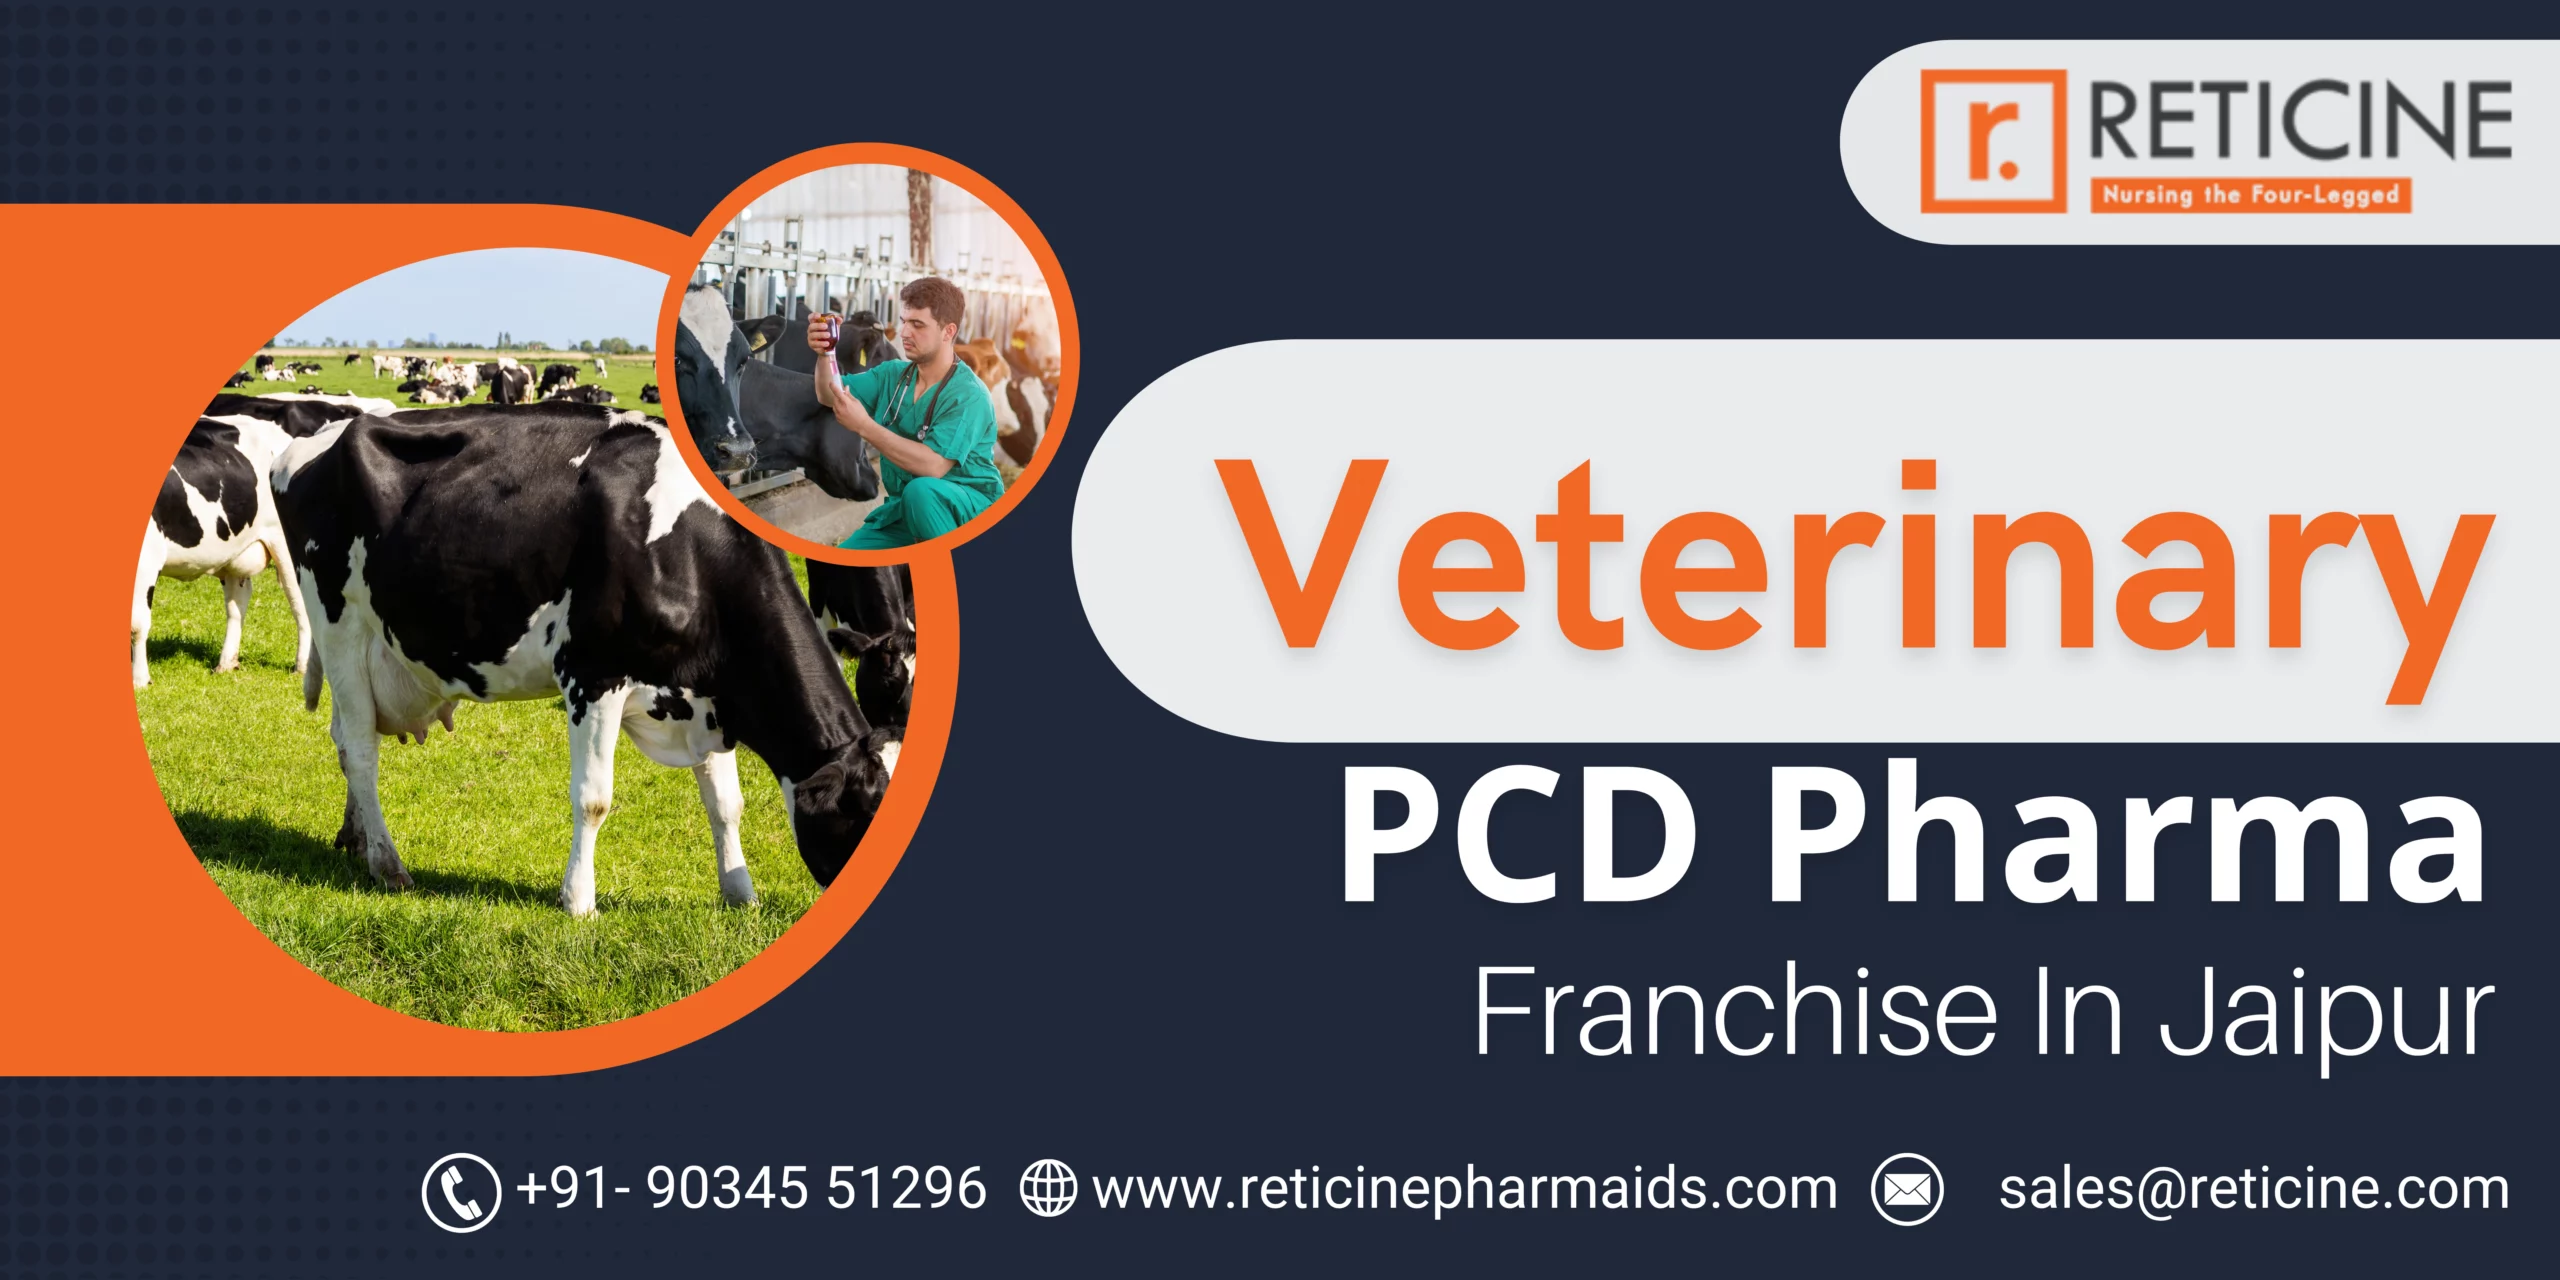 Veterinary PCD Pharma Franchise In Jaipur